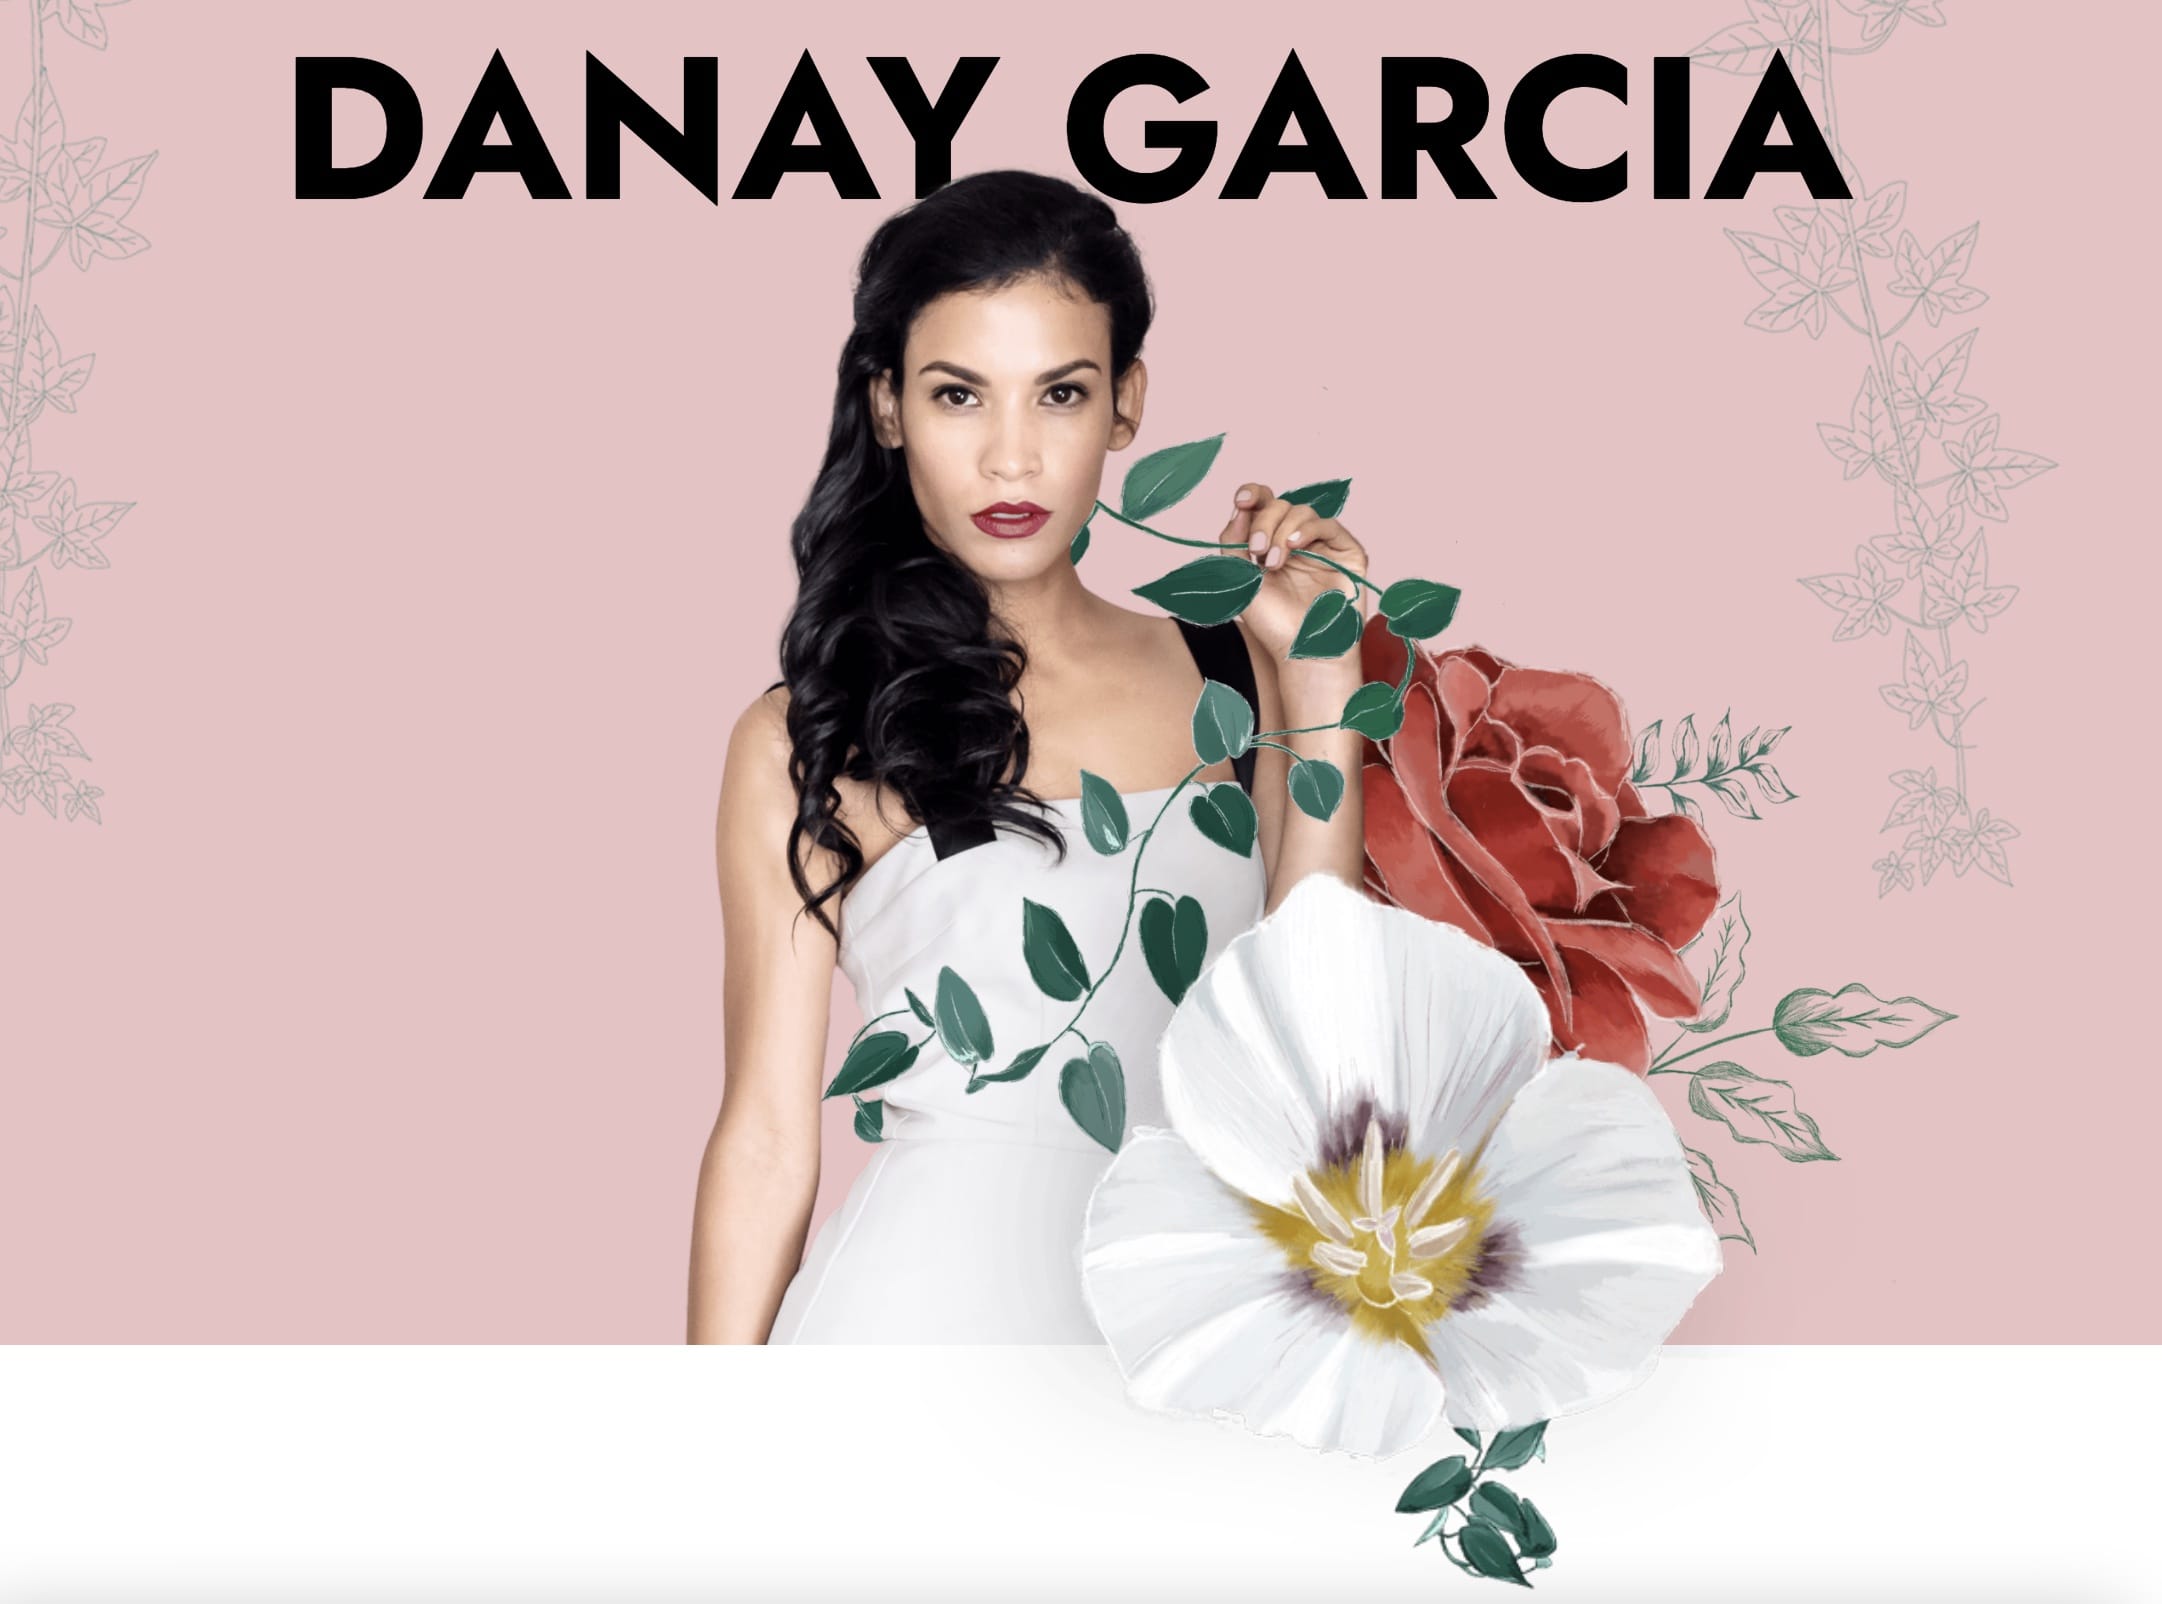 Danay Garcia - News - IMDb